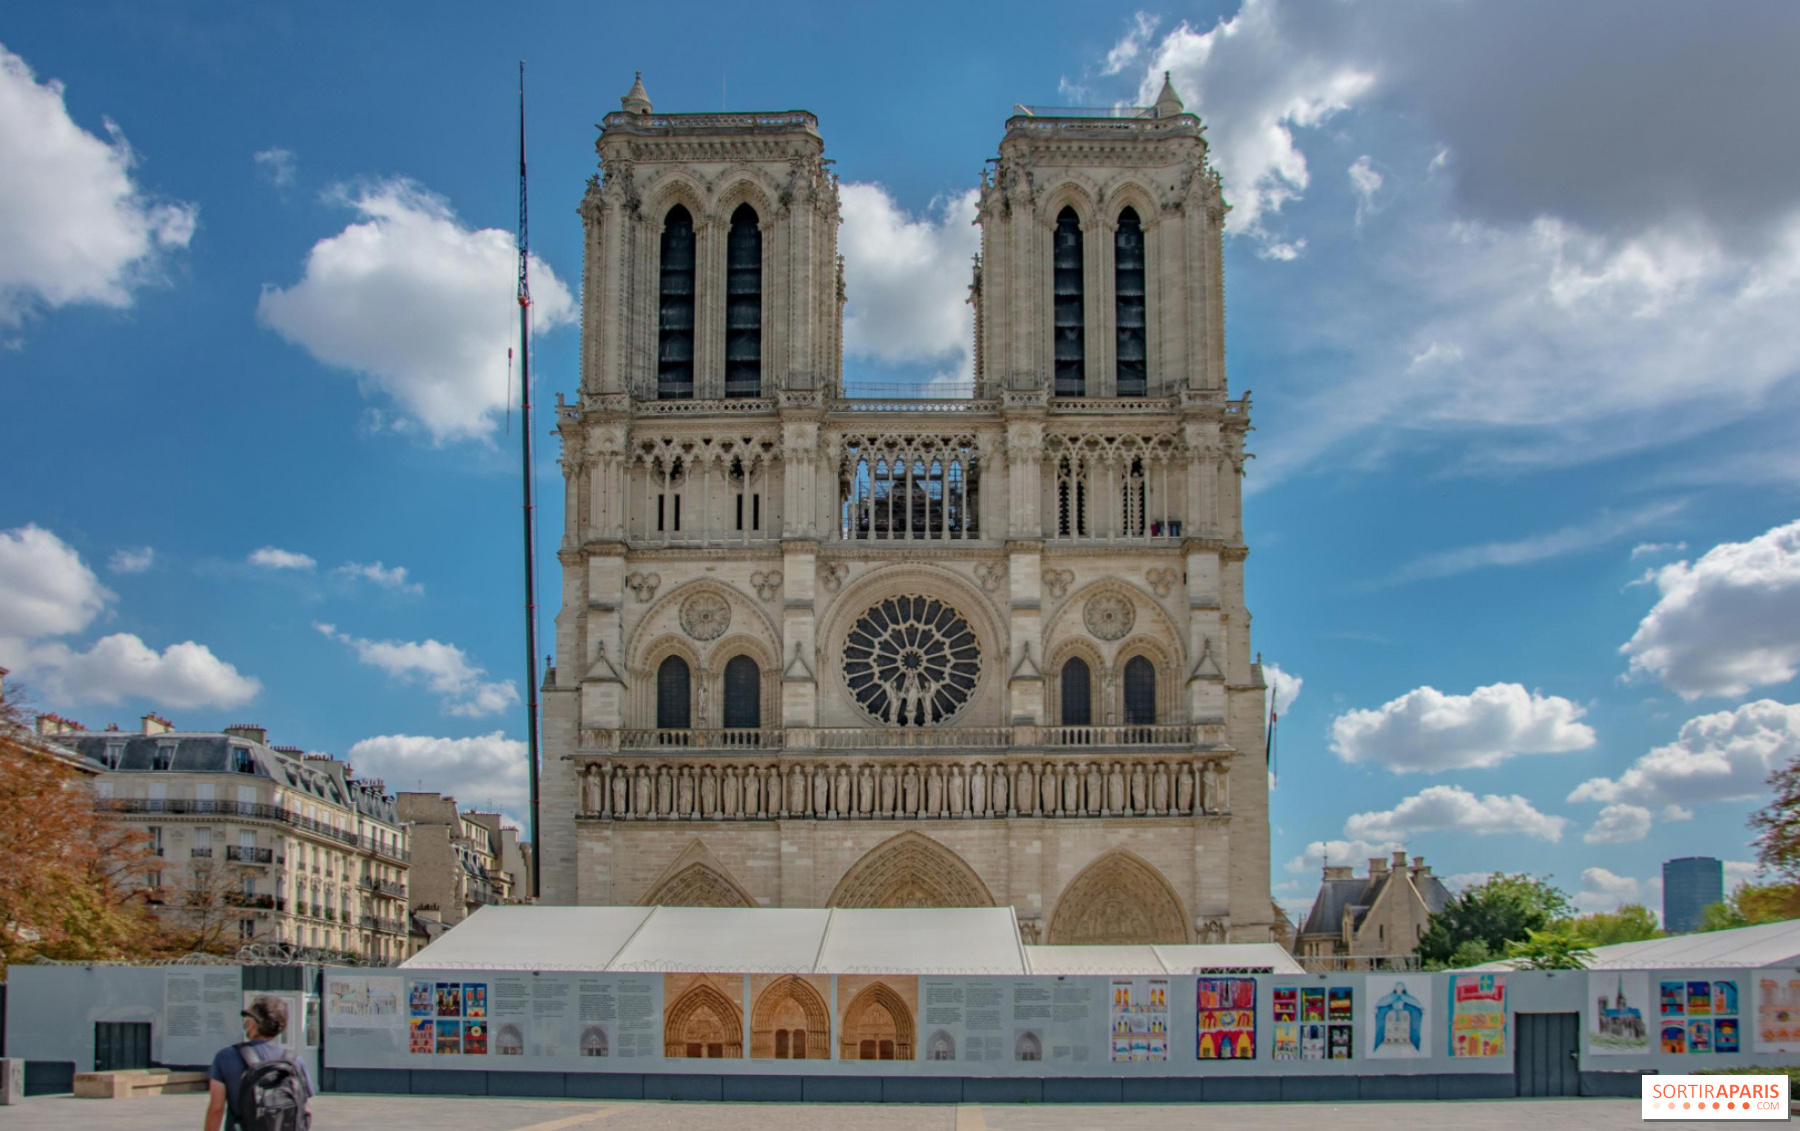 Notre Dame 2022 Calendar Education